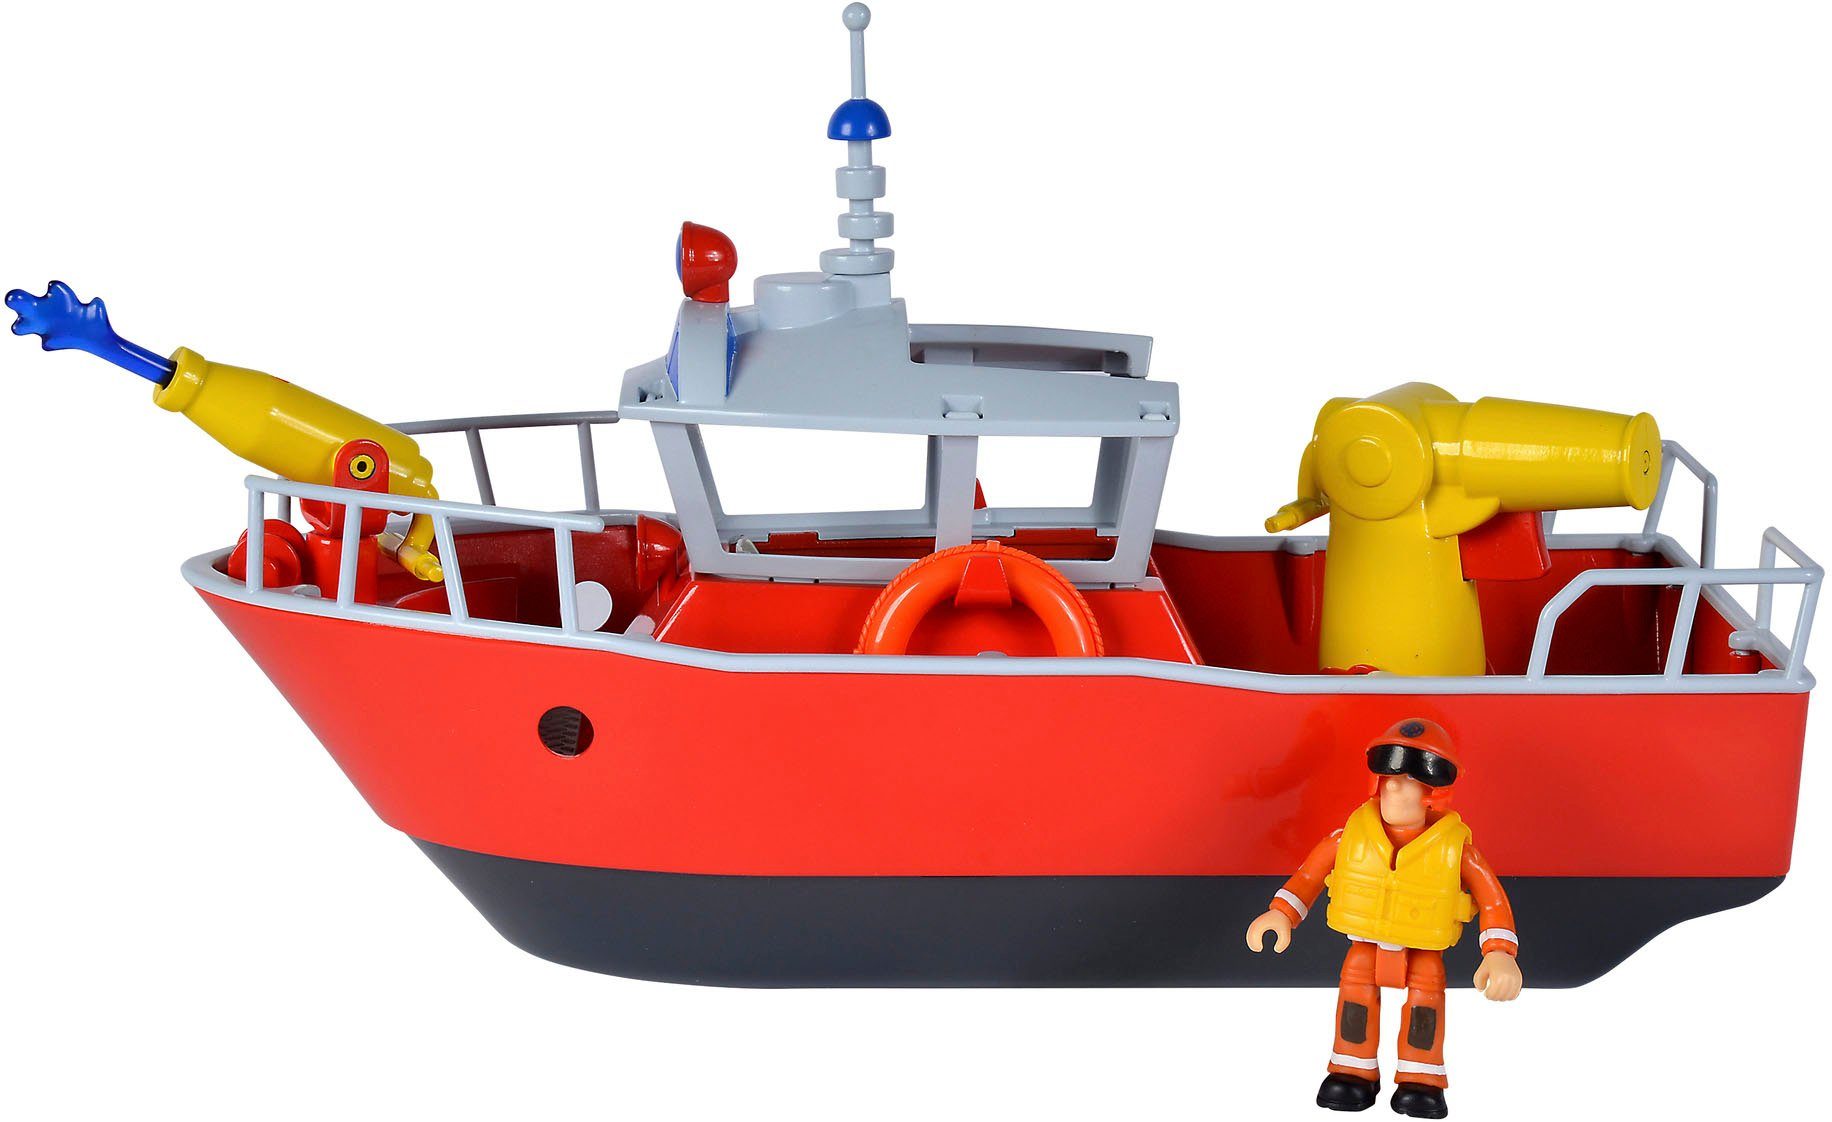 SIMBA Badespielzeug Feuerwehrmann Sam, Titan Feuerwehrboot